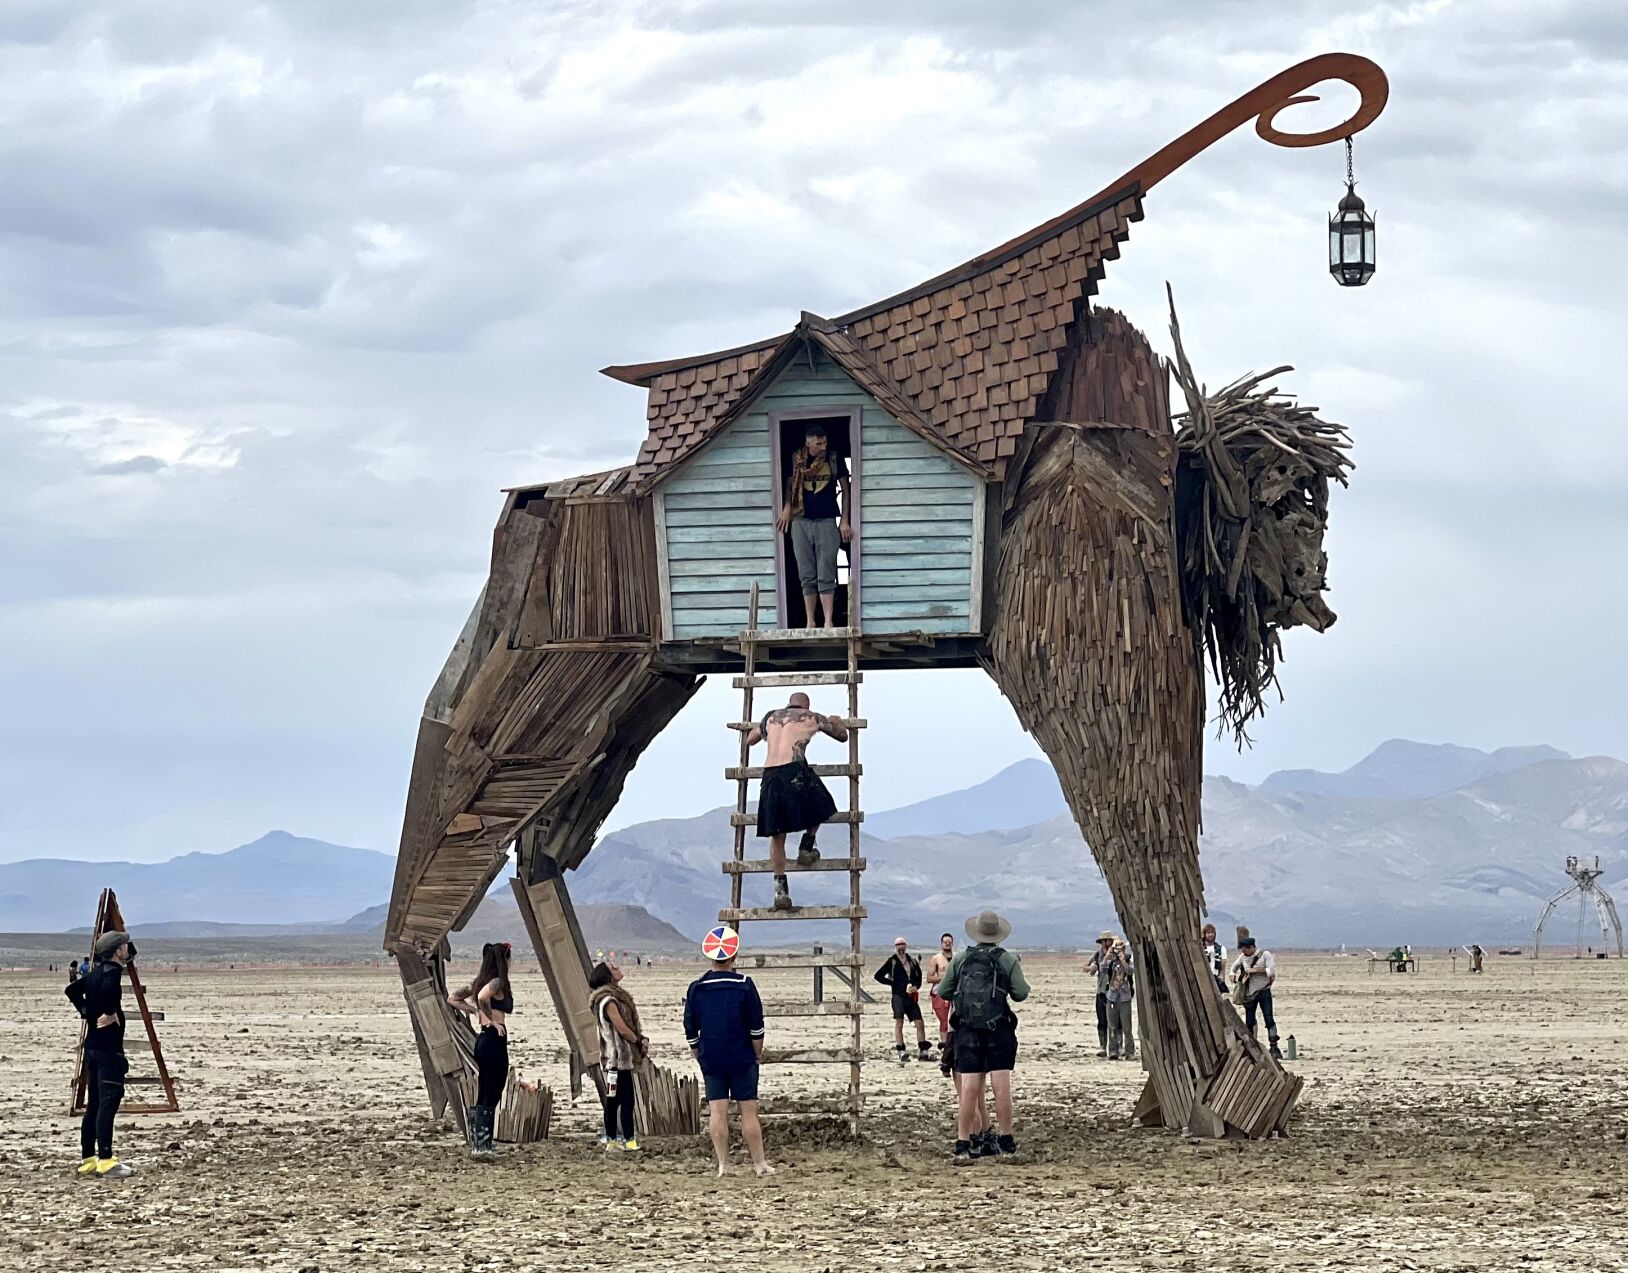 Burning Man mud bath didn't deter shaggy New Orleans artwork